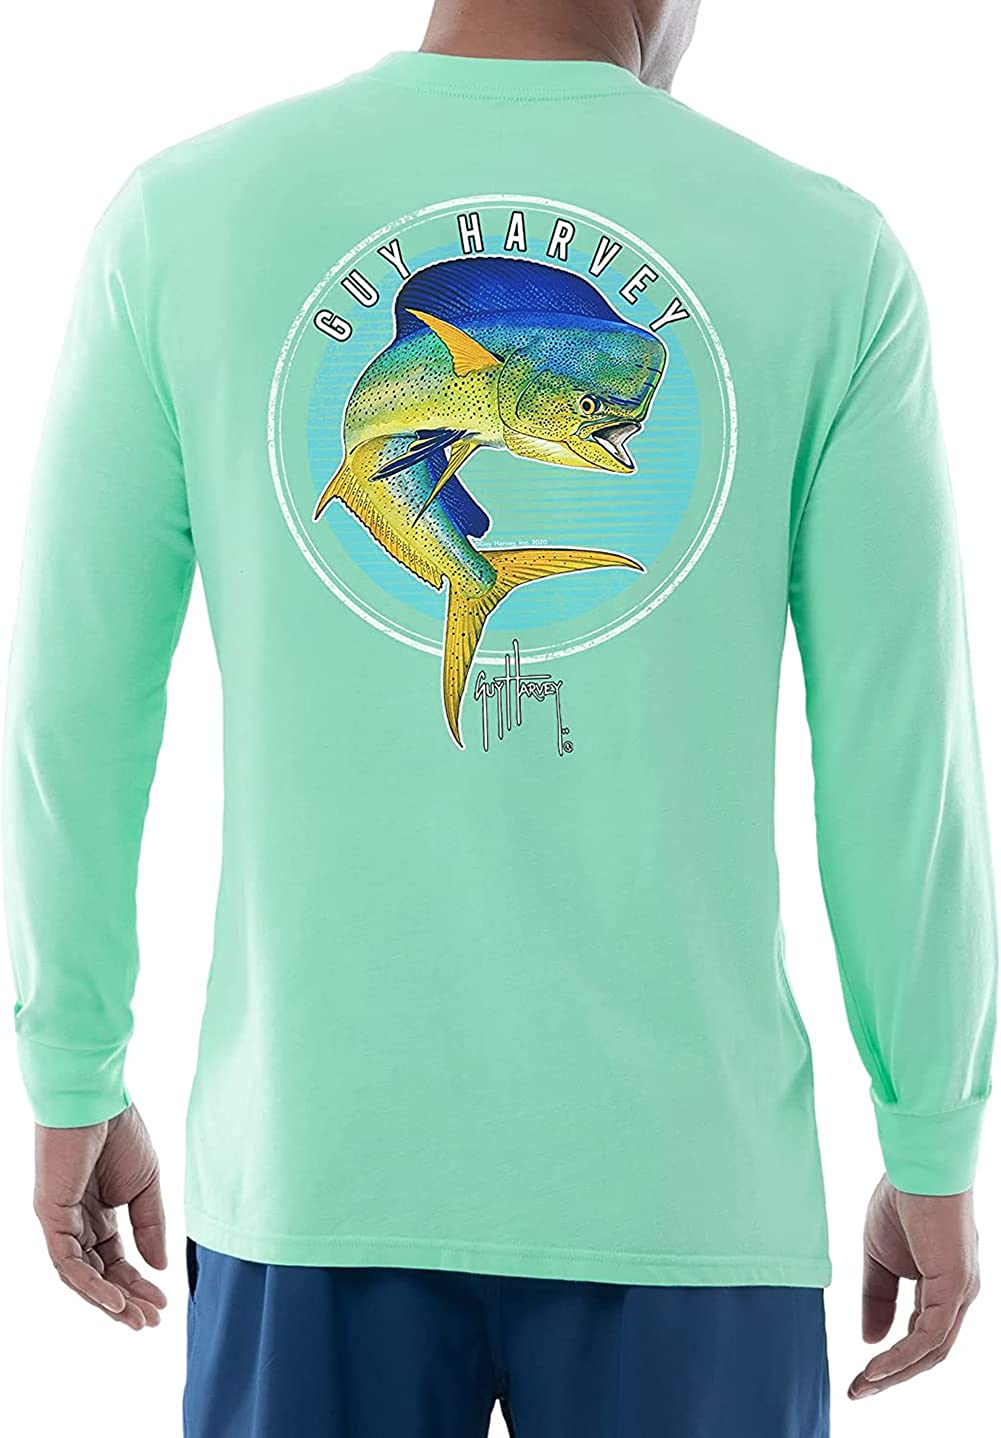 Guy Harvey Men's Logo L/S Fishing Pocket T-shirtLargeSky